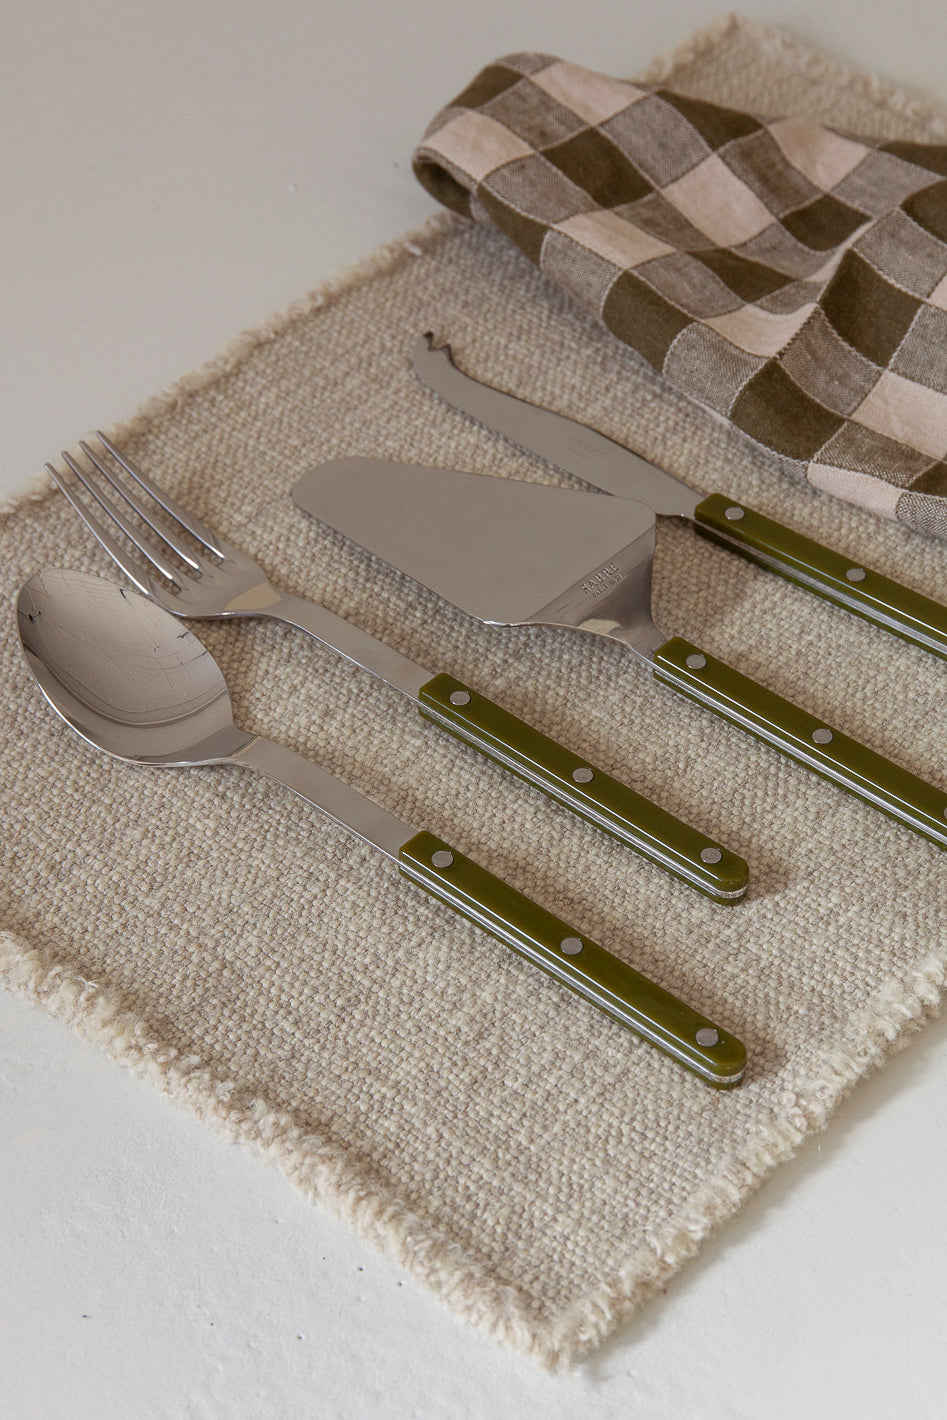 Bistrot Green Serving Cutlery Set